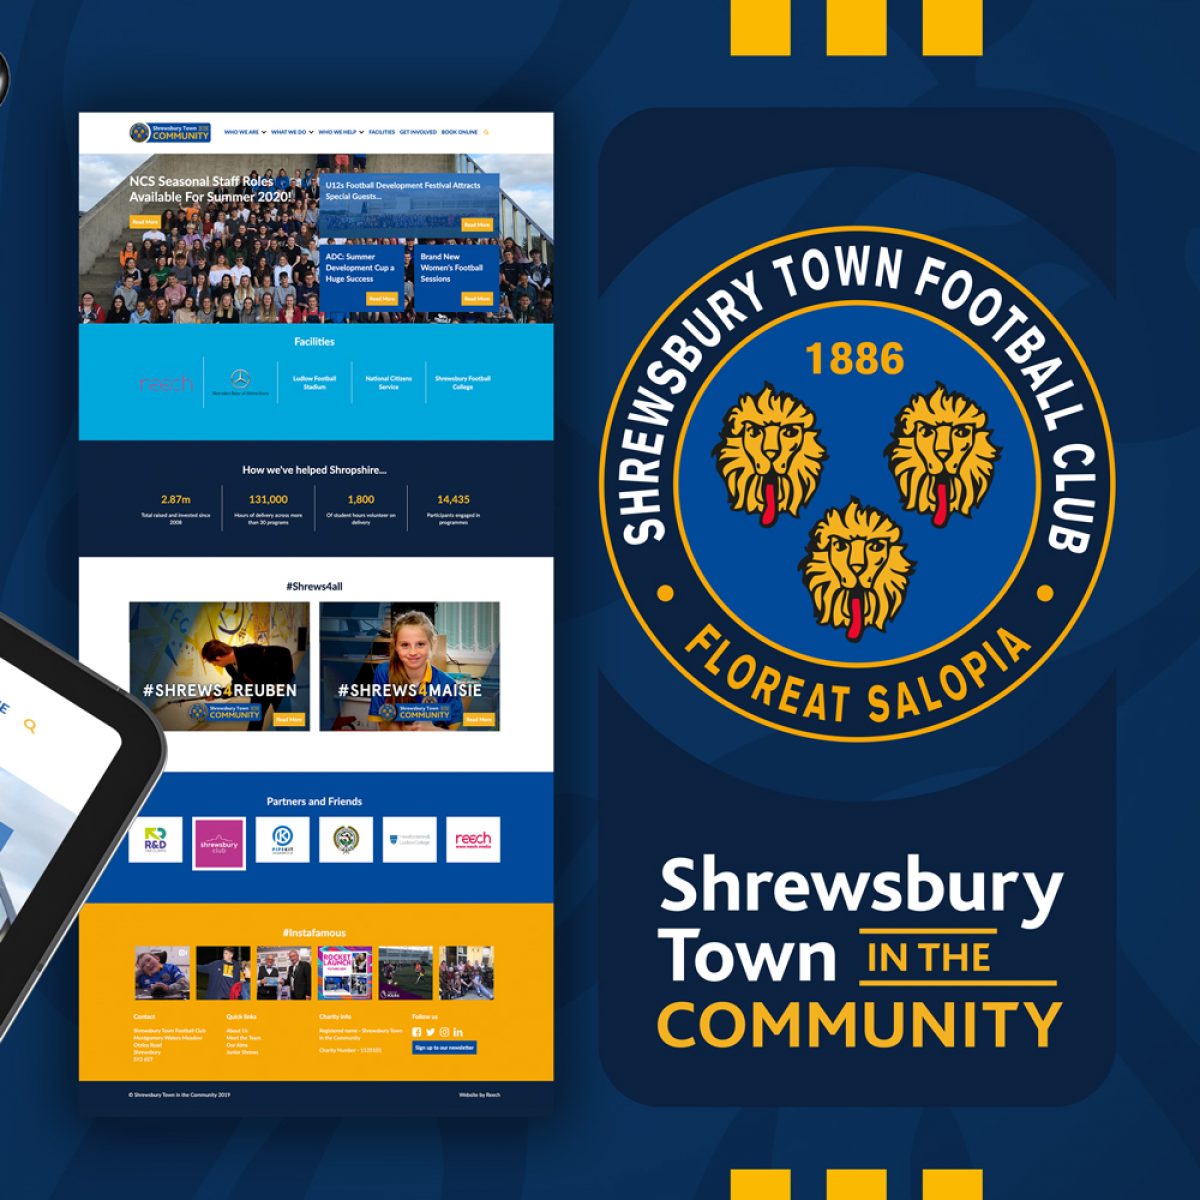 Shrewsbury Town in the Community